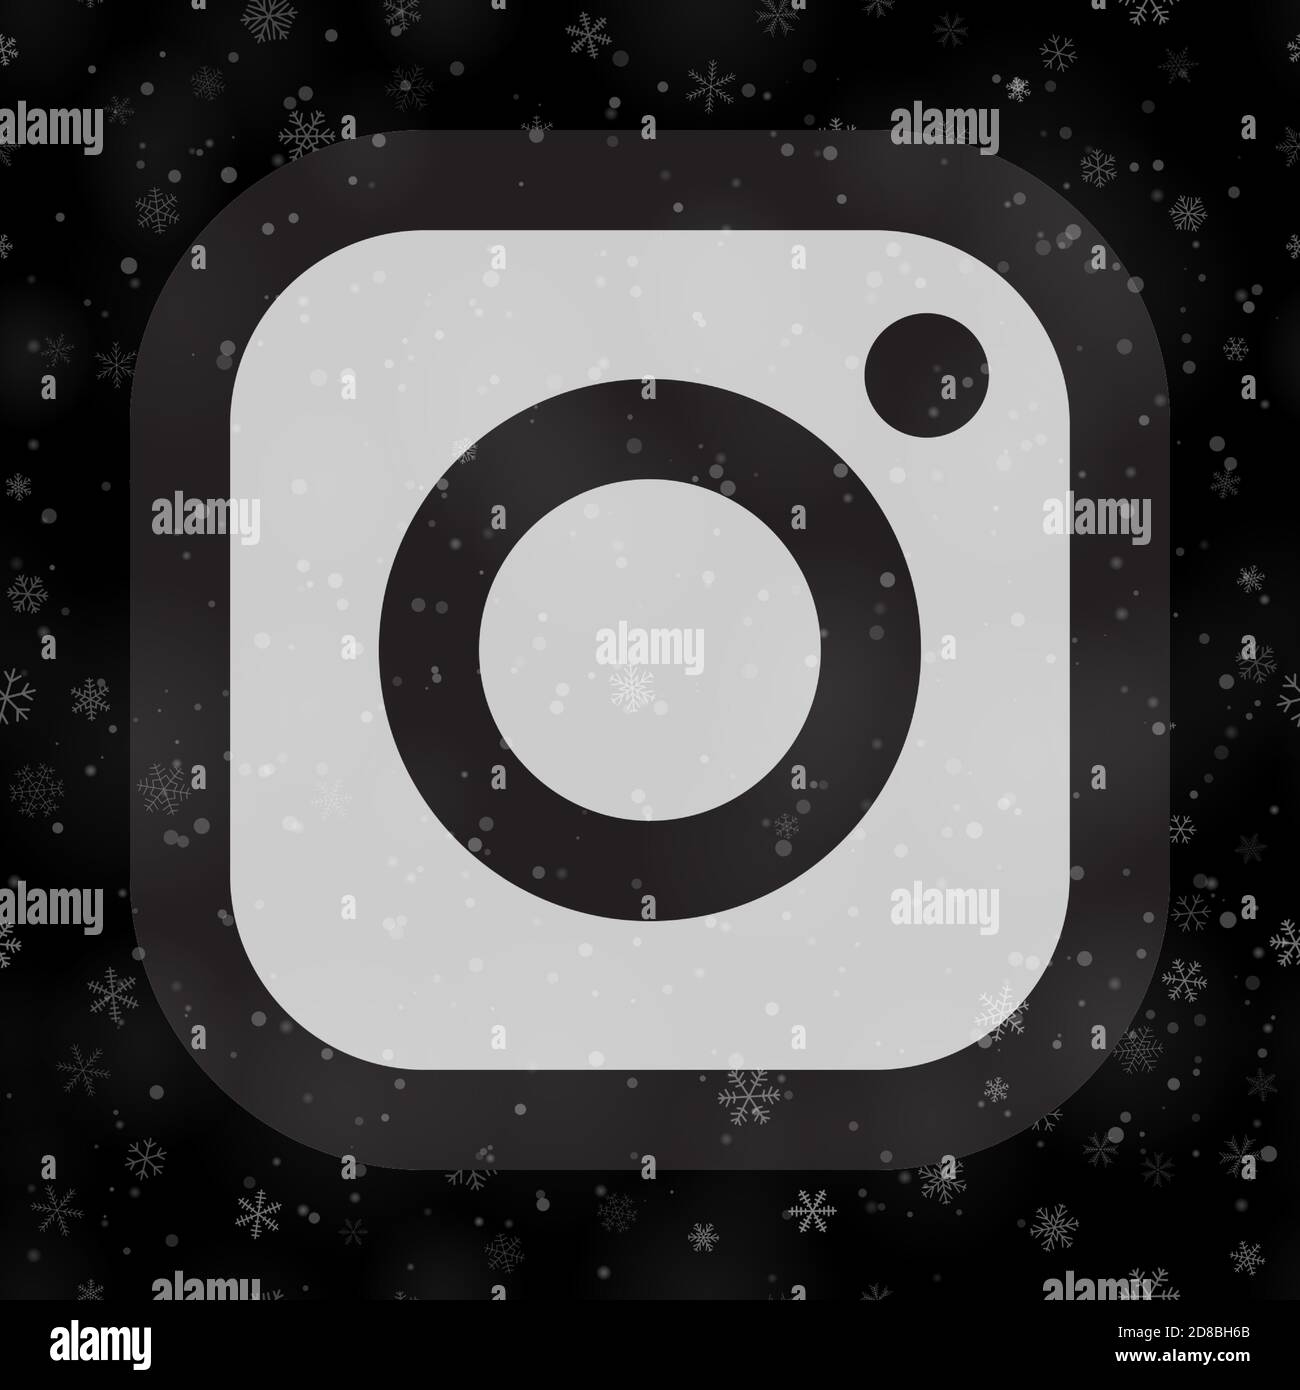 Discover 142+ instagram logo neon best - camera.edu.vn